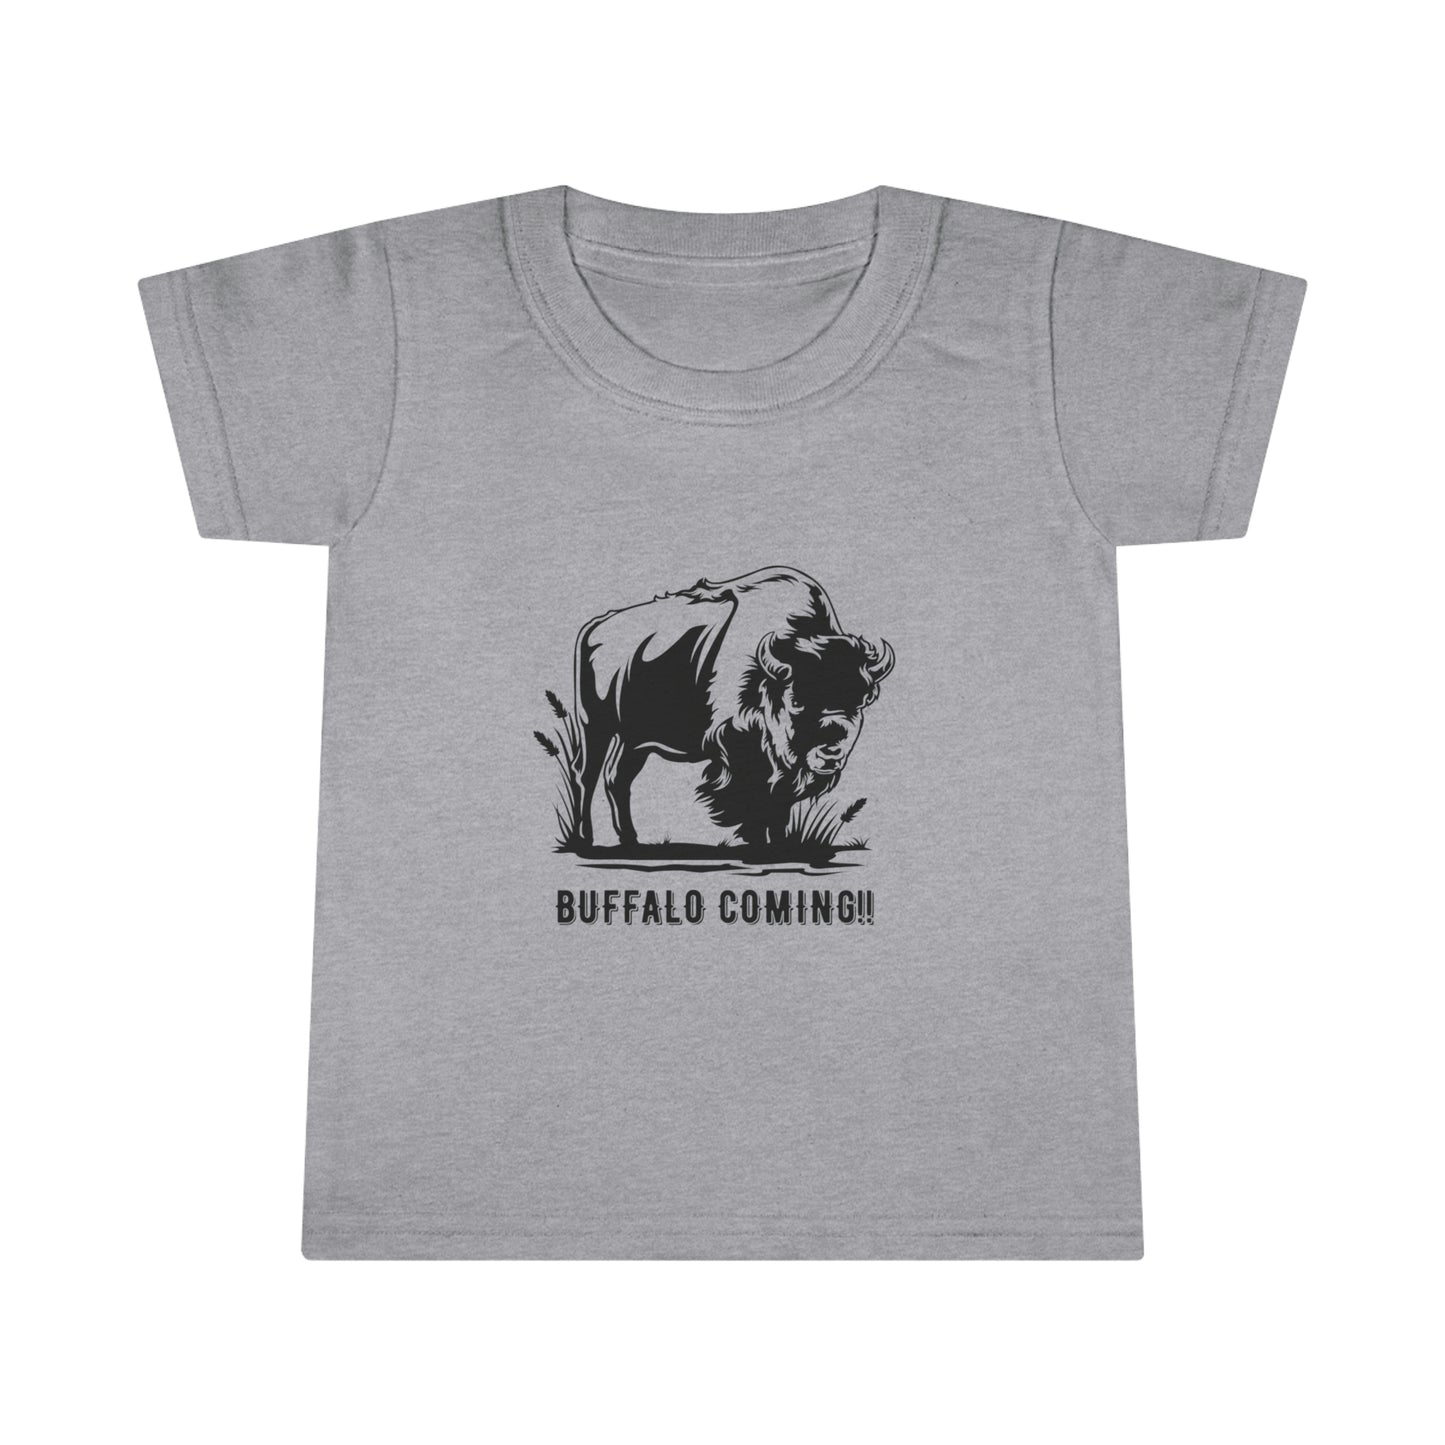 Buffalo Coming!! (Toddler)